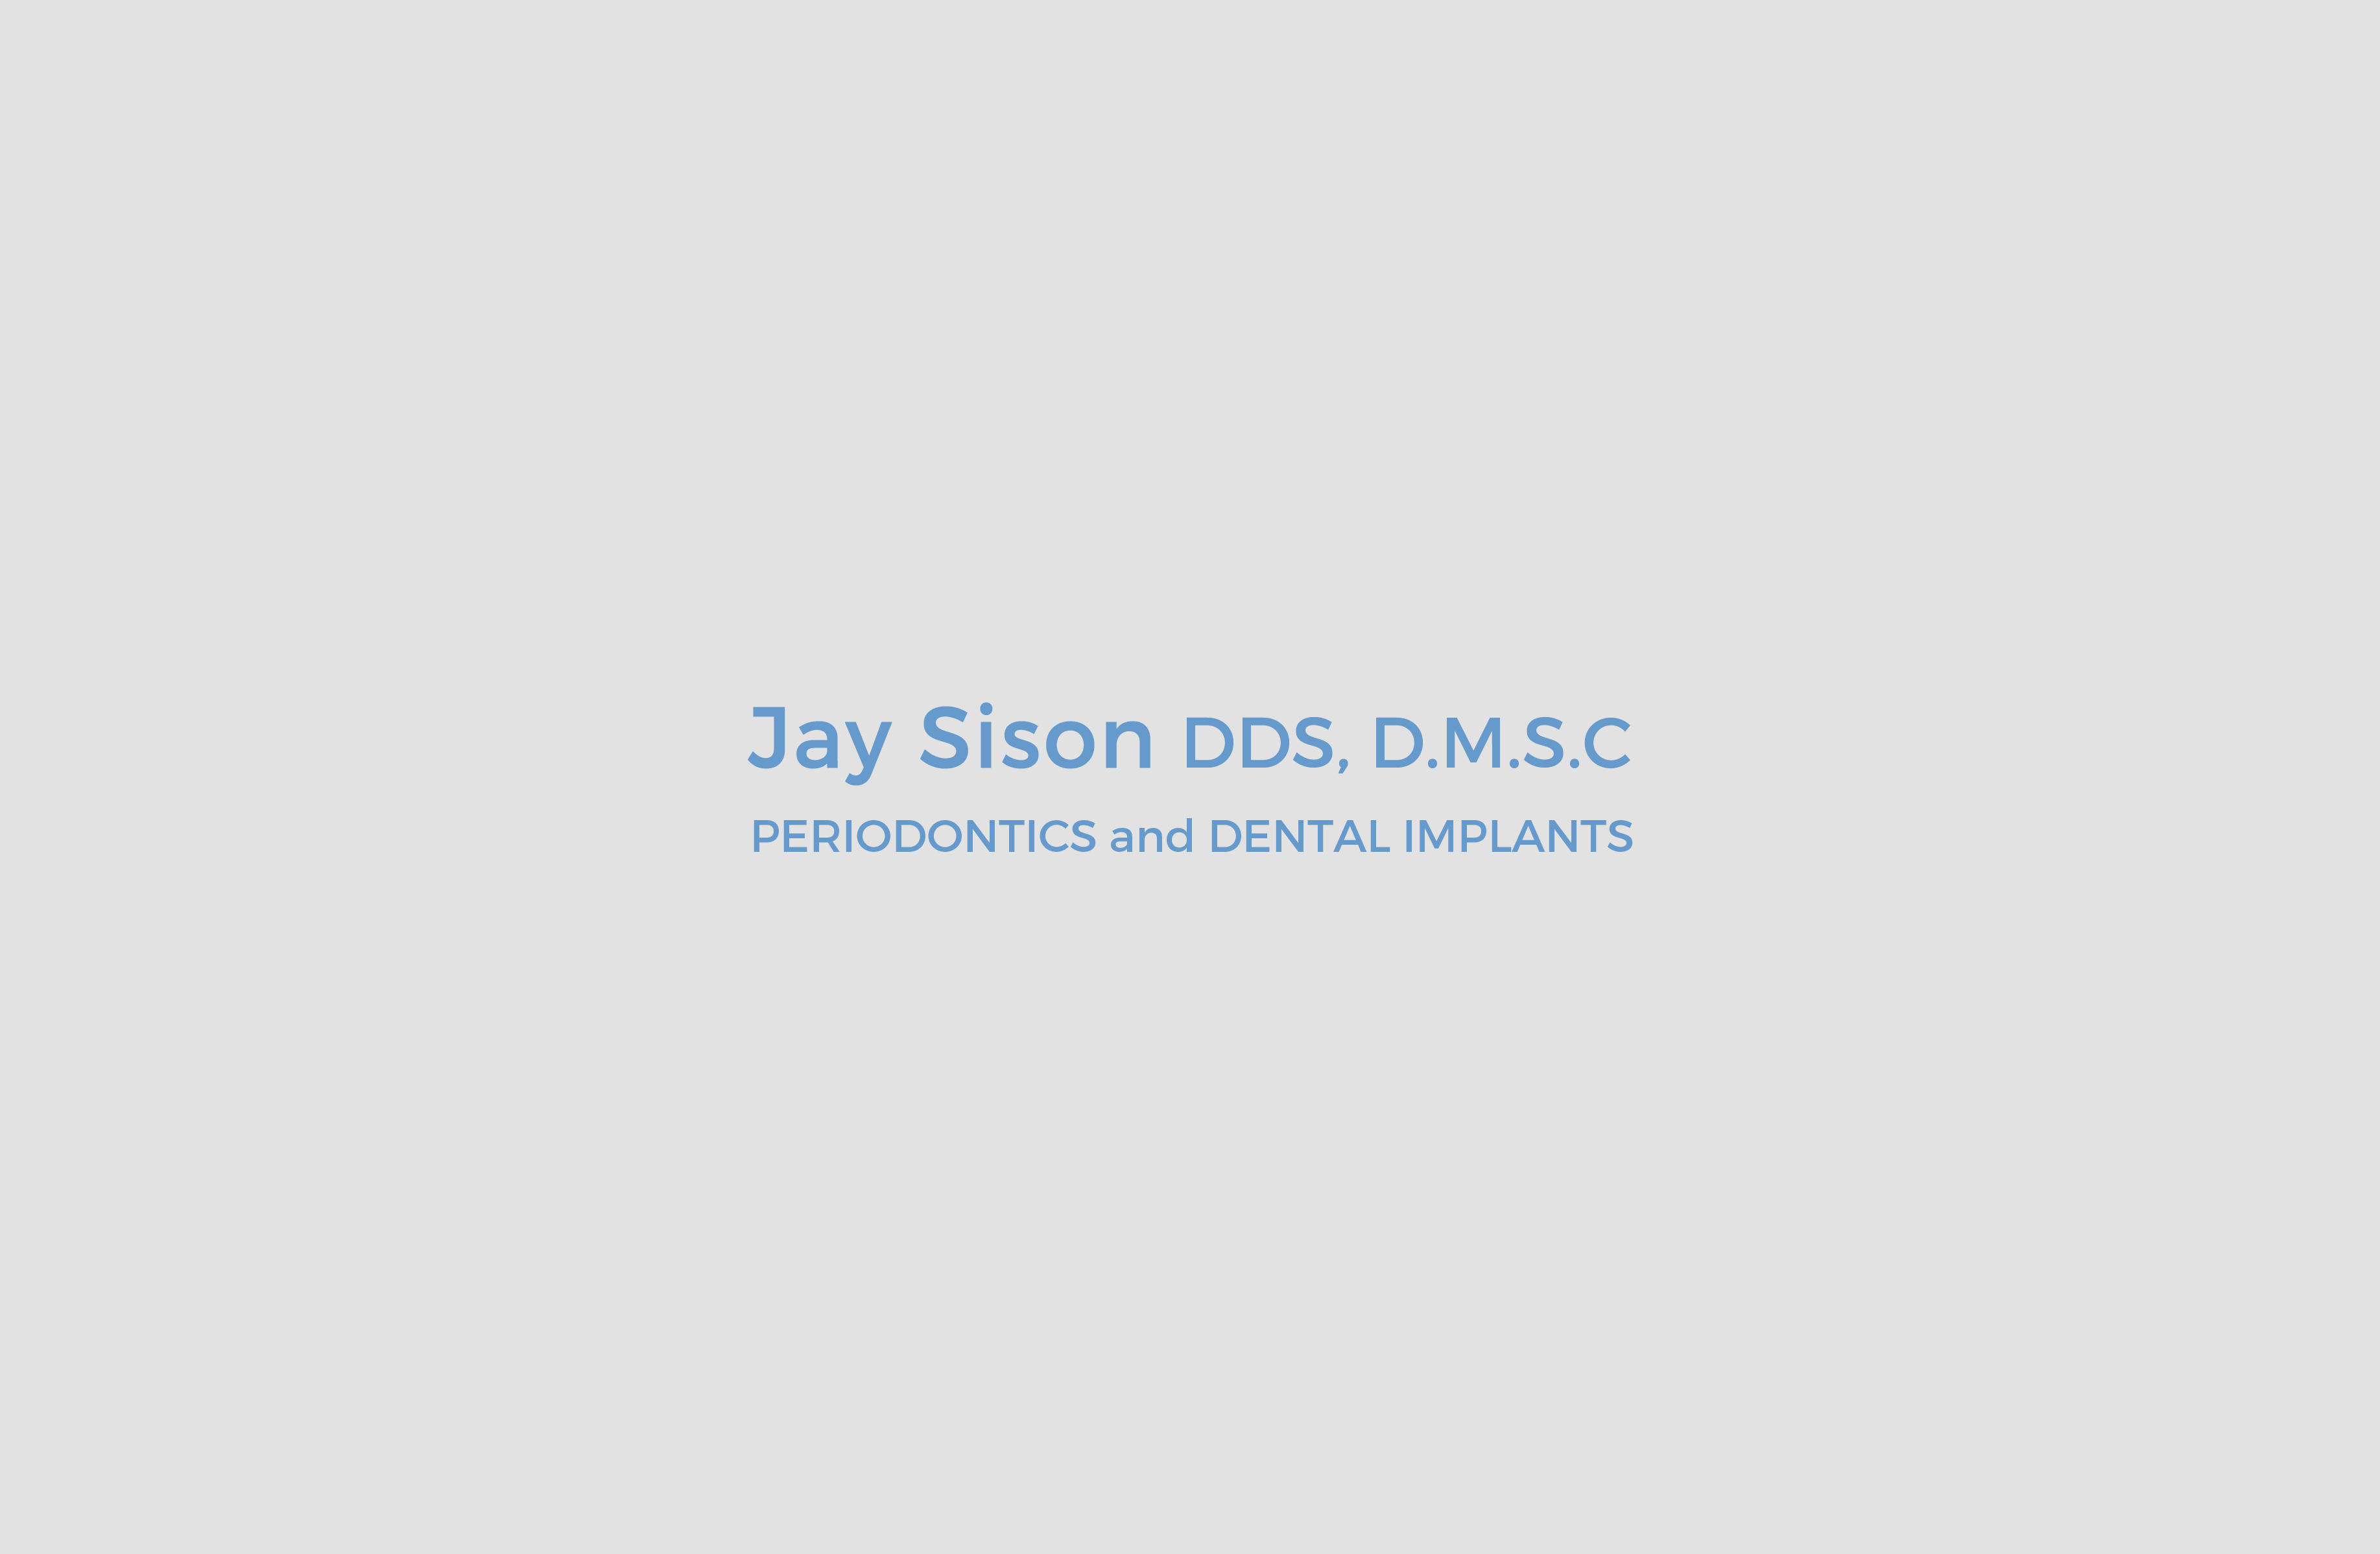 Dr. Jay Sison